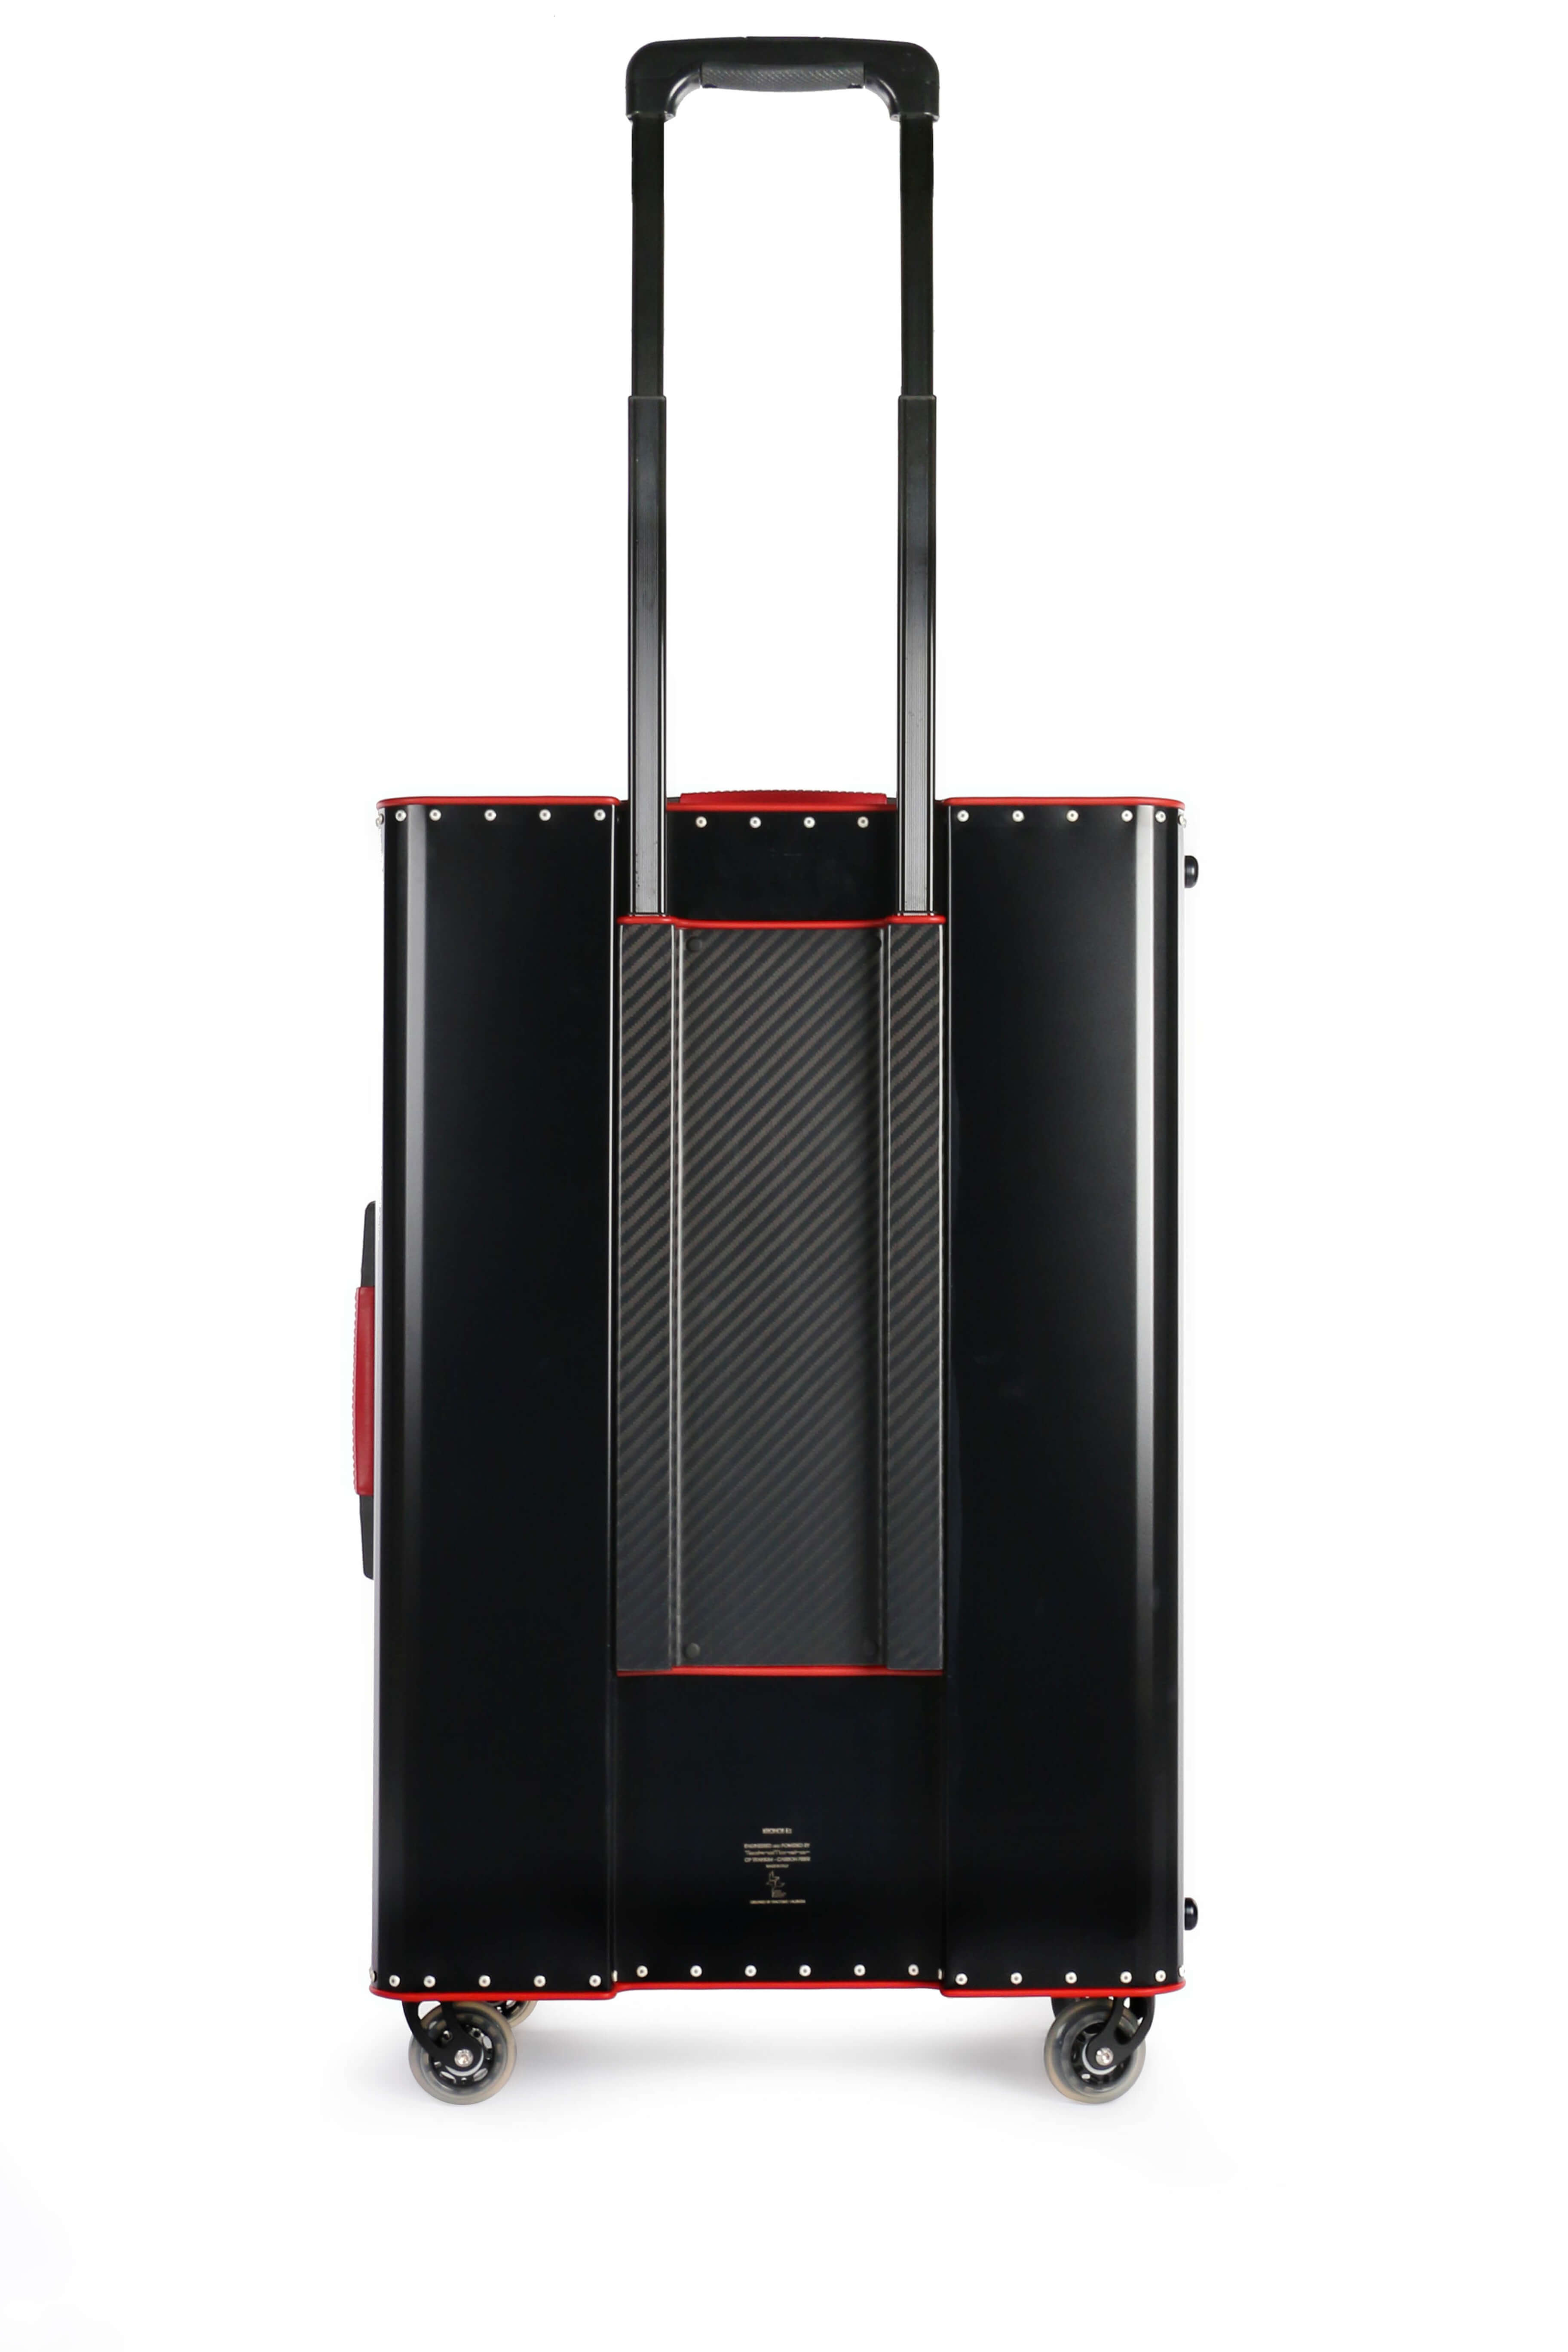 Kronos Black Titanium Check-In Luggage, Red